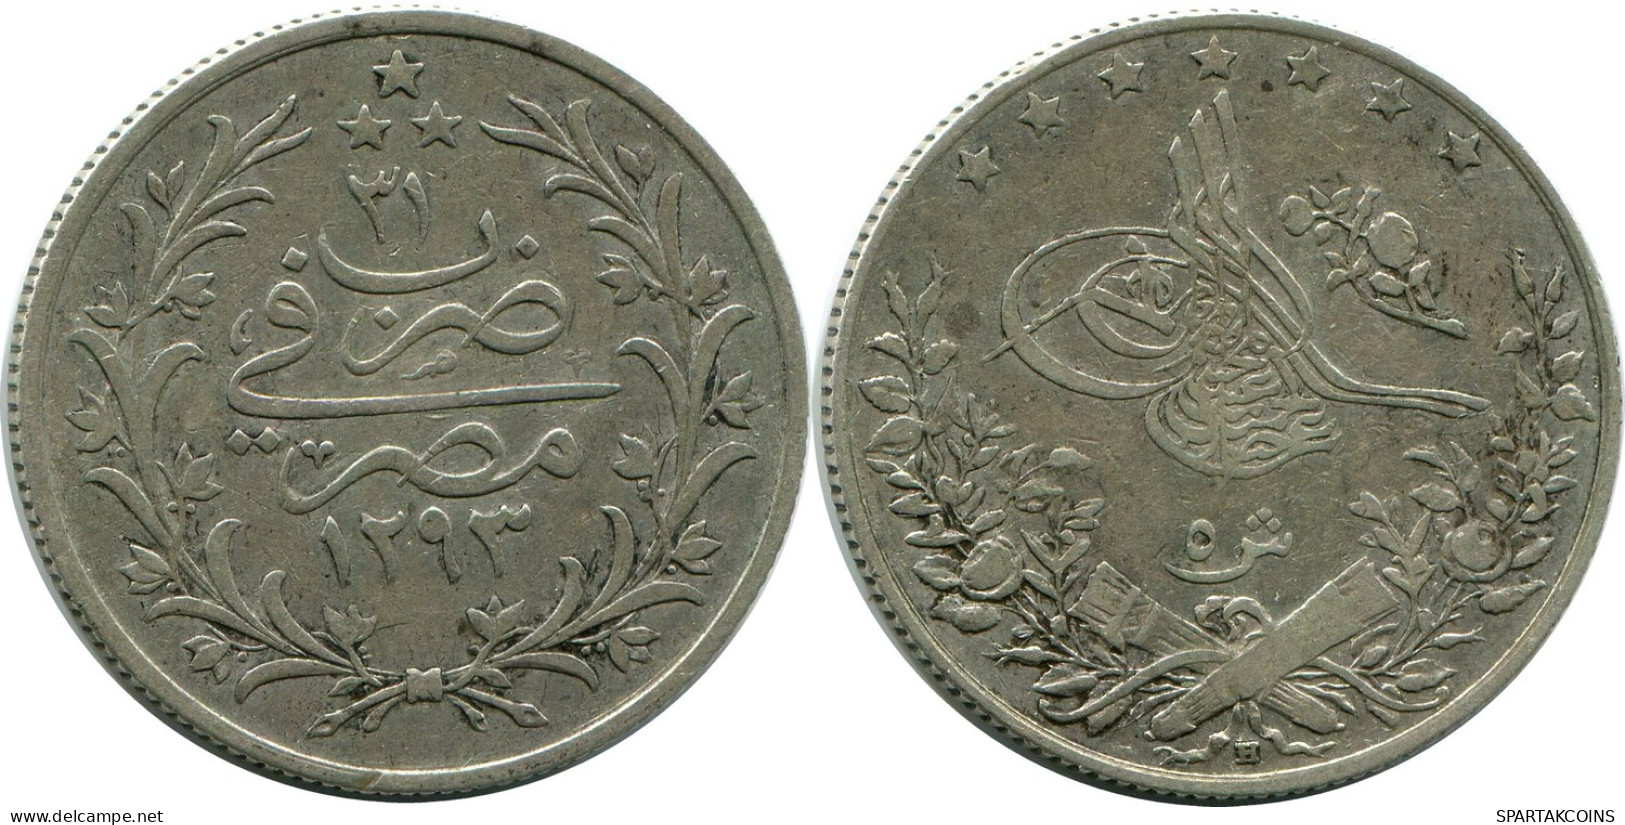 5 QIRSH 1905 EGYPT Islamic Coin #AH288.10.U - Egypt